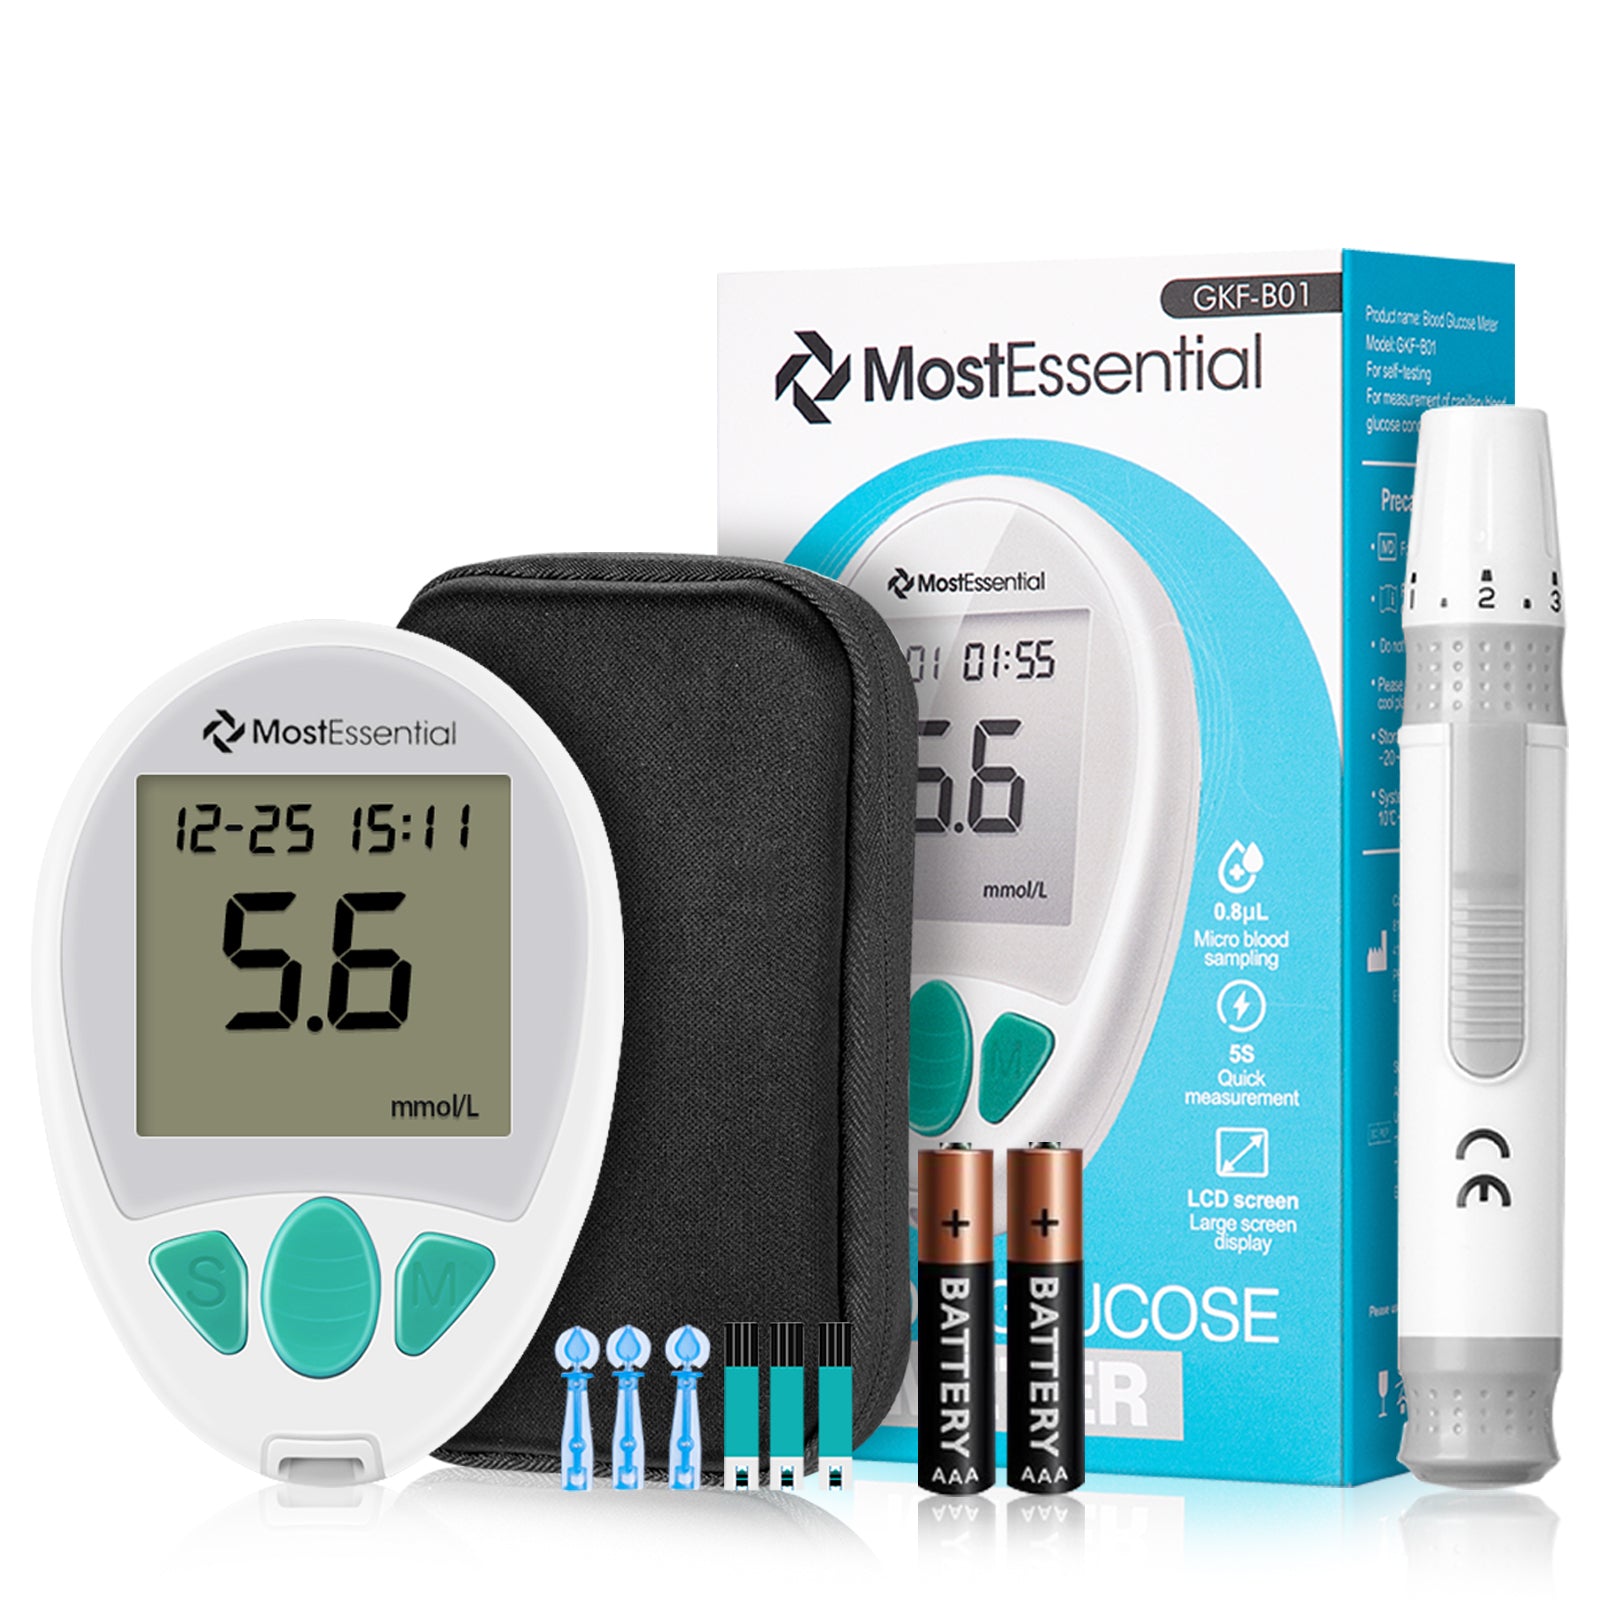 MostEssential Glucosemeter